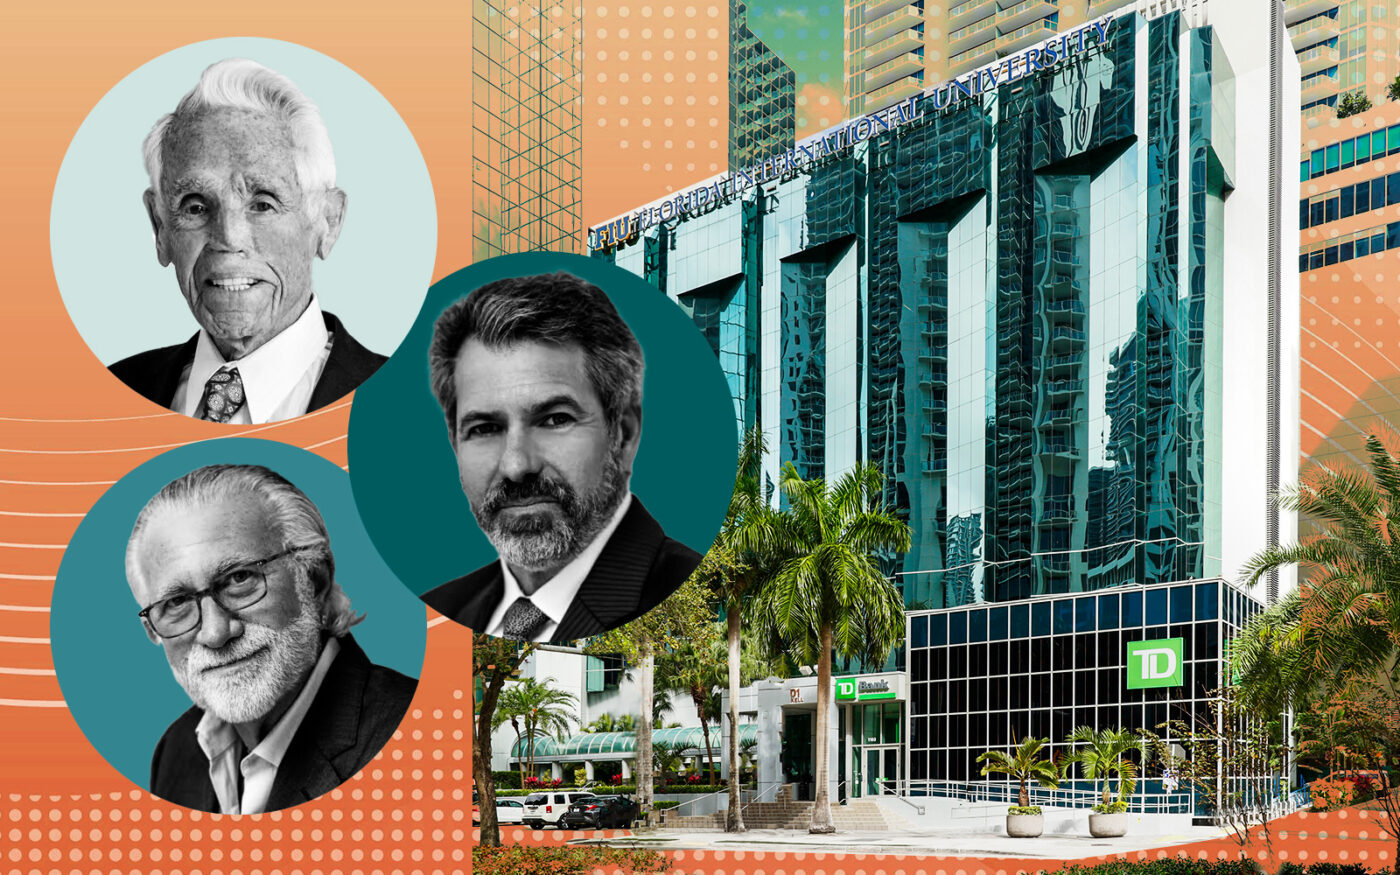 1101 Brickell Avenue office towers in Miami with Florida East Coast Realty’s Tibor Hollo, Wayne Hollo, Jerome Hollo